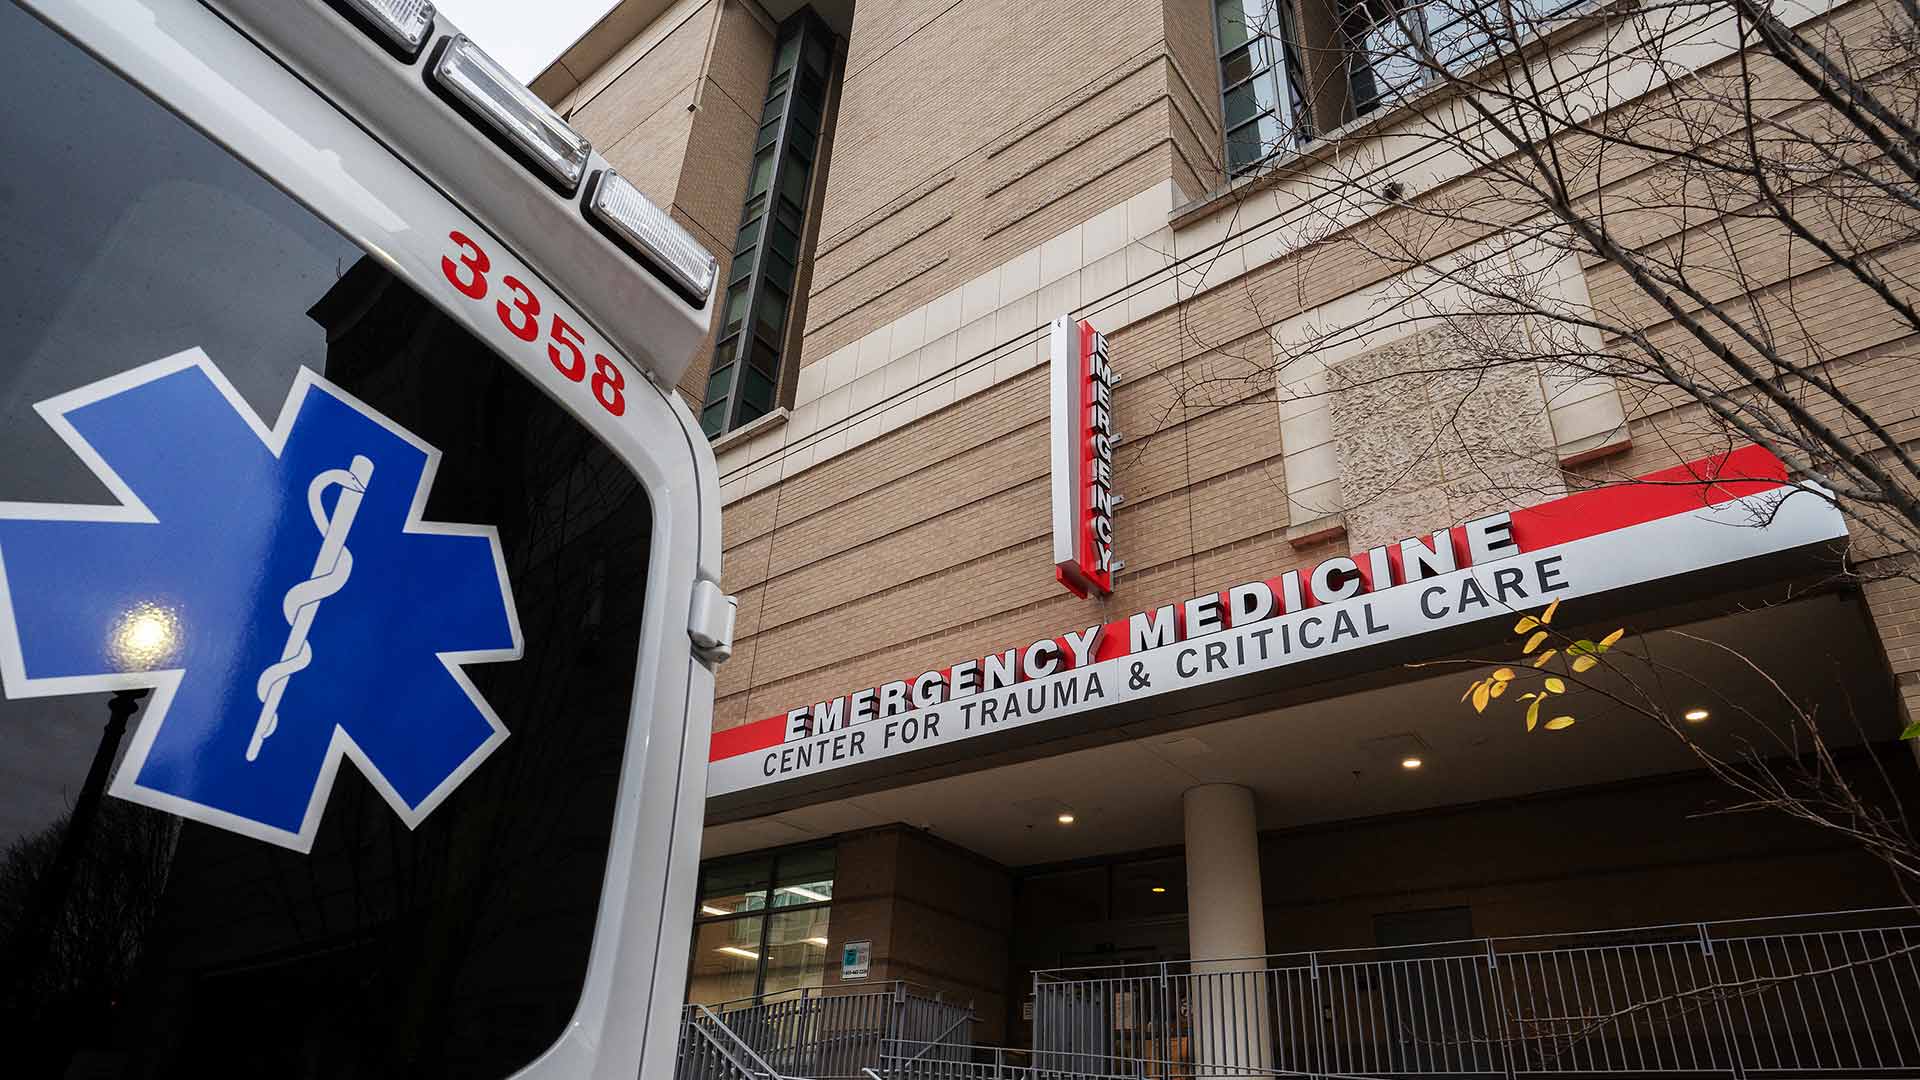 Exterior of a hospital emergency room entrance.